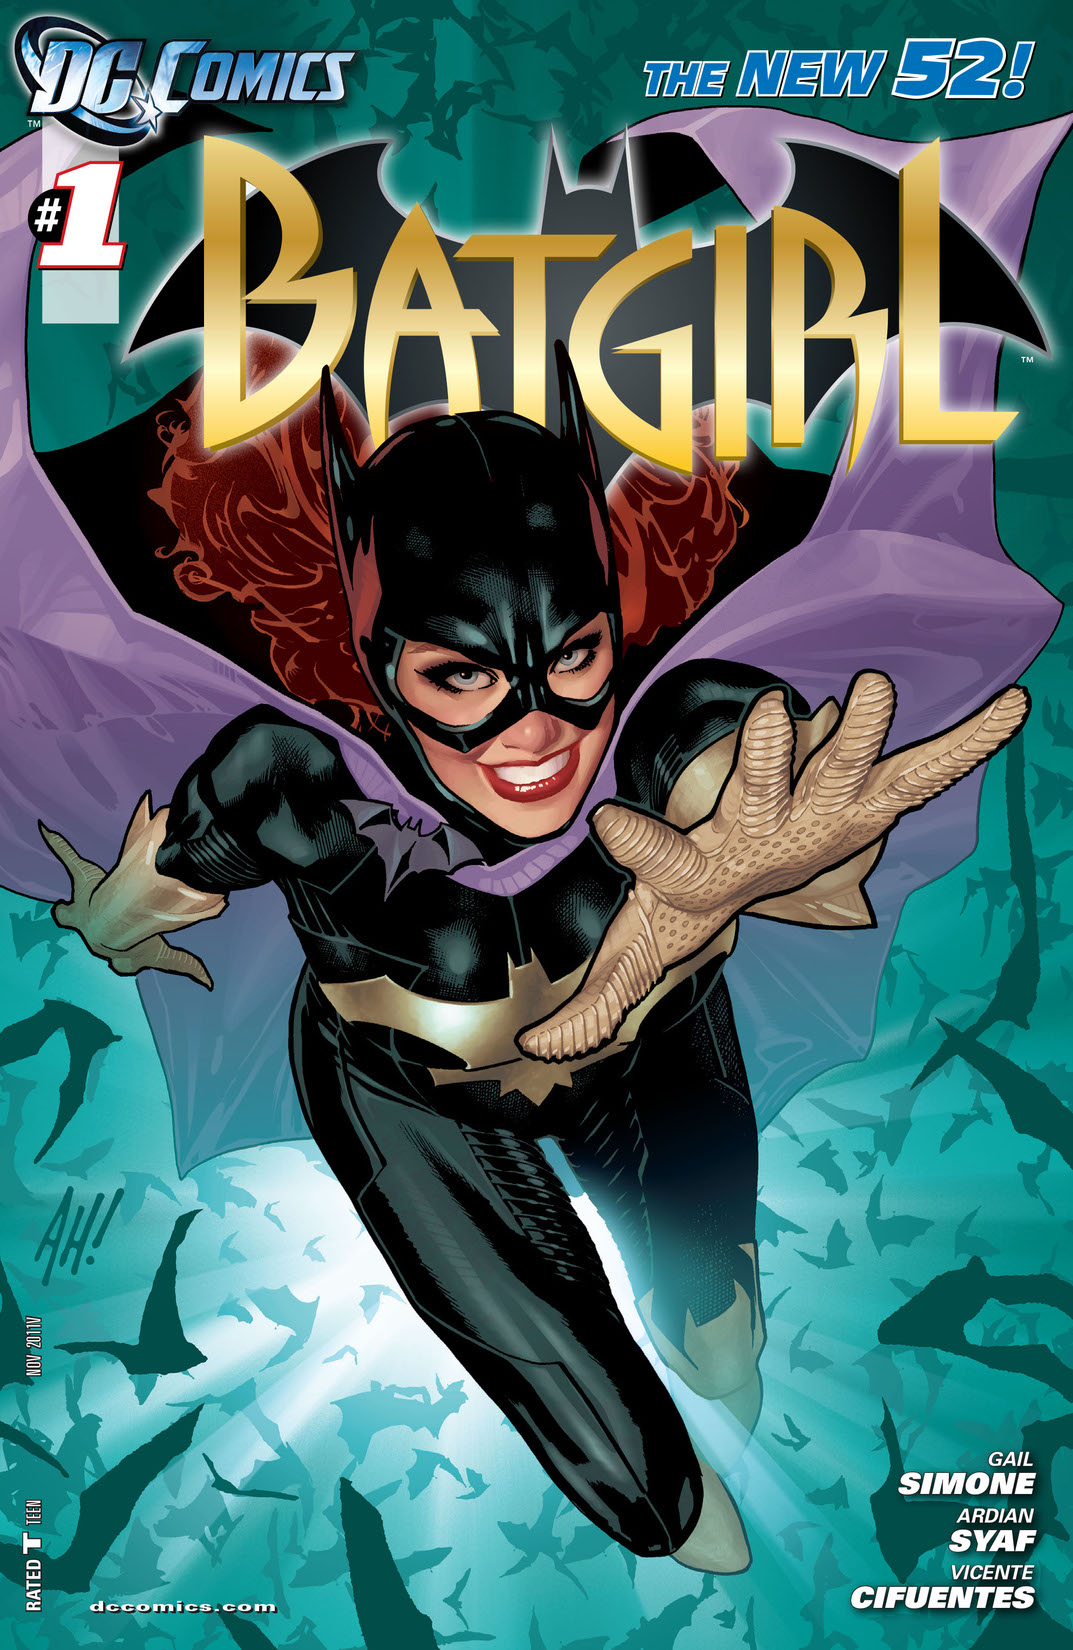 Batgirl (2011-) #1 preview images